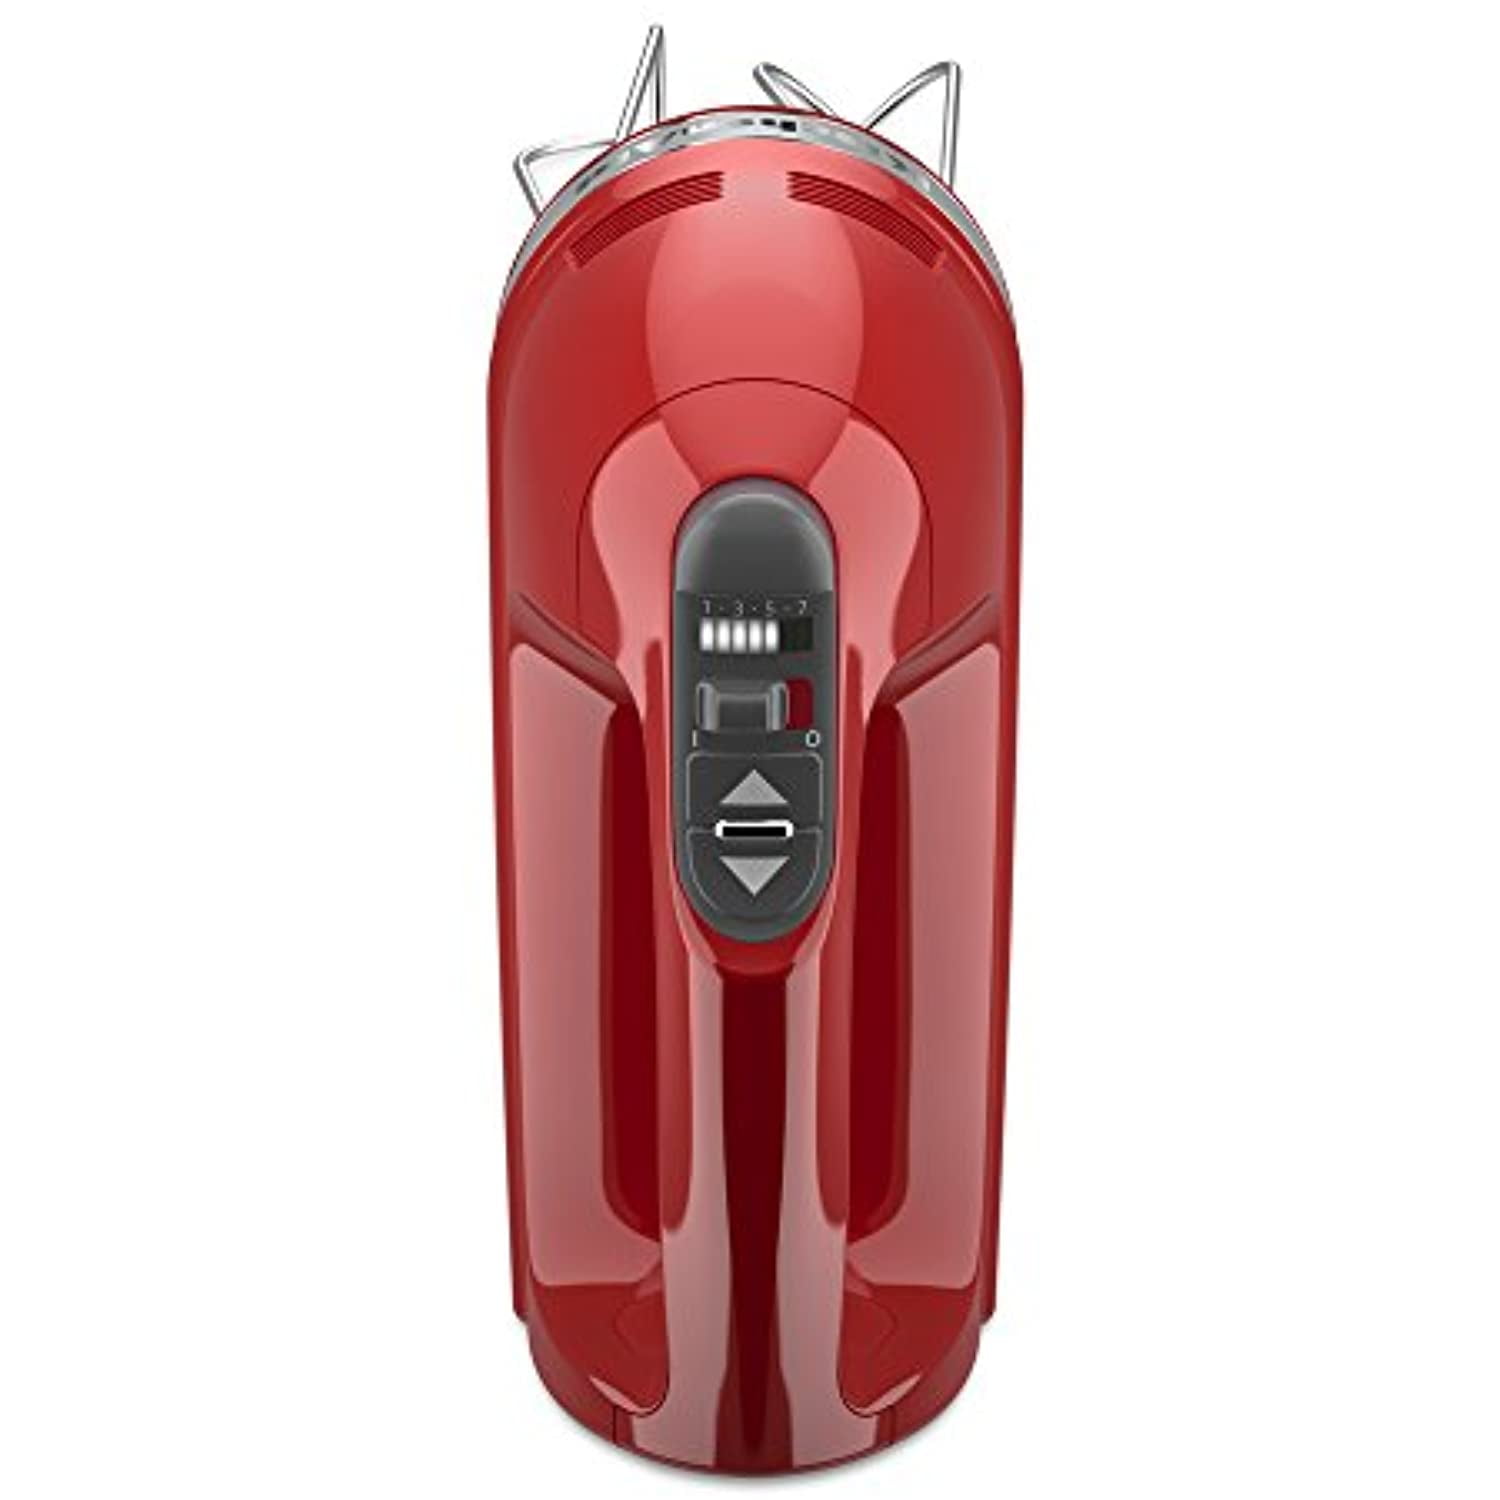 KitchenAid 7-Speed Artisan 7 Red Hand Mixer KHM7TER5 Red W